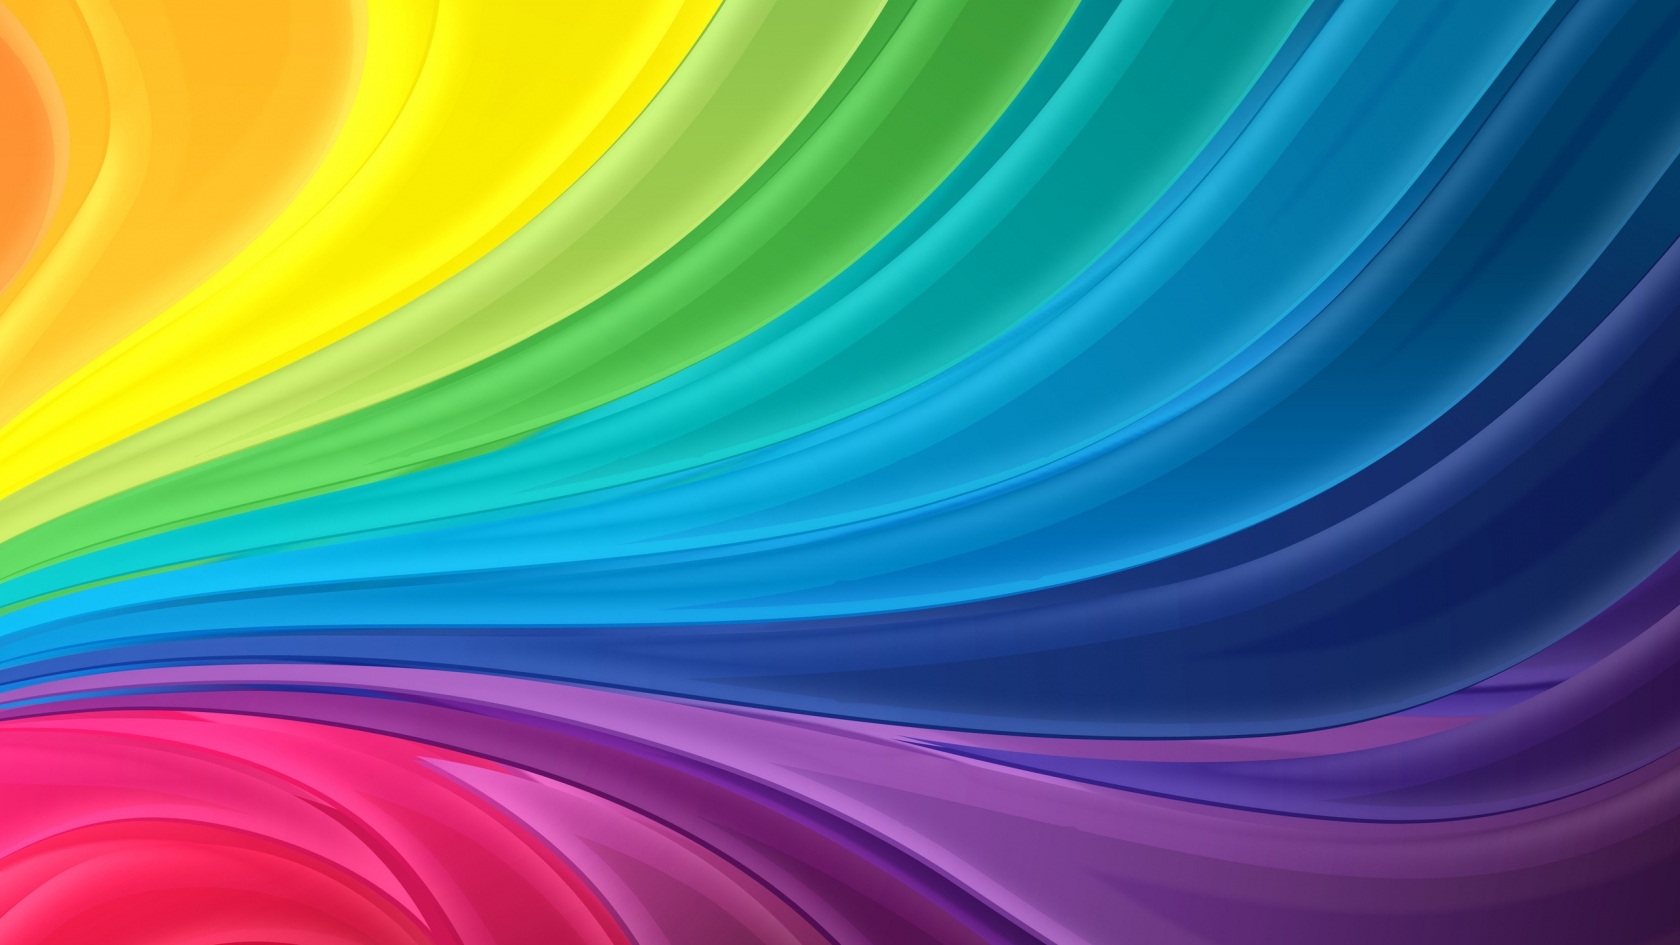 Curl Rainbow for 1680 x 945 HDTV resolution